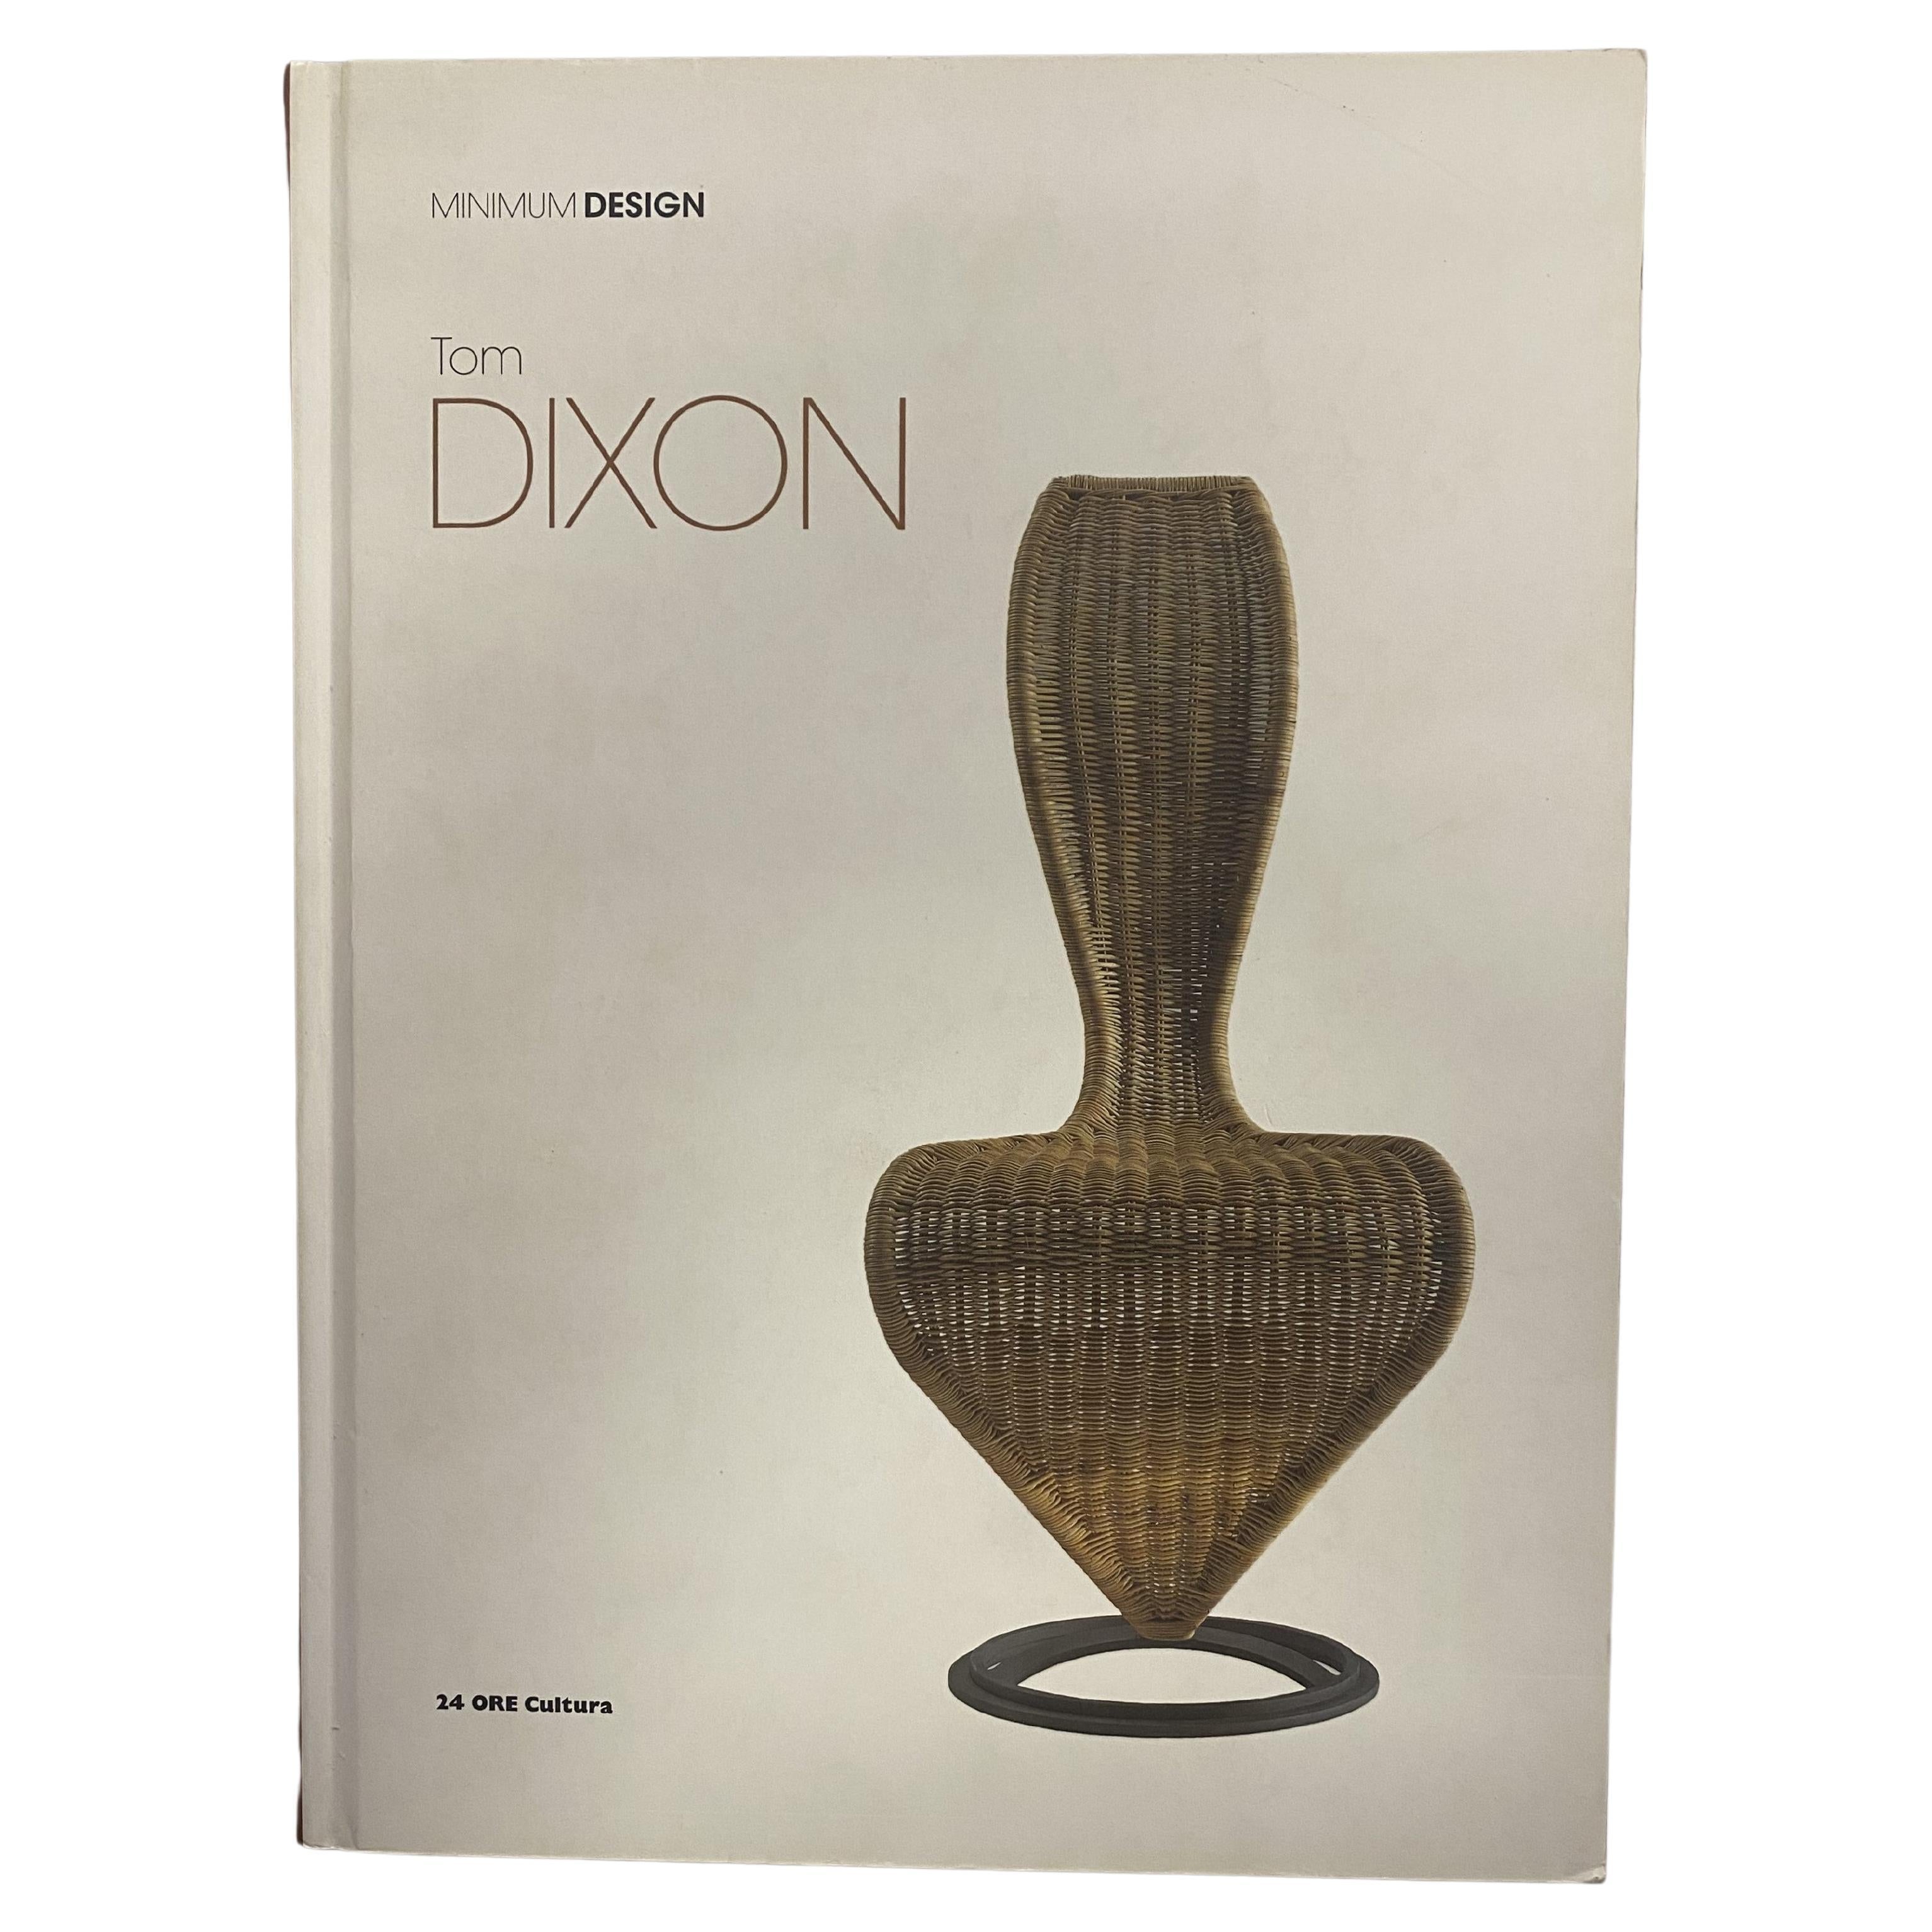 Tom Dixon: Minimum Design by Davide Fabio Colaci and Angela Rui (Book)